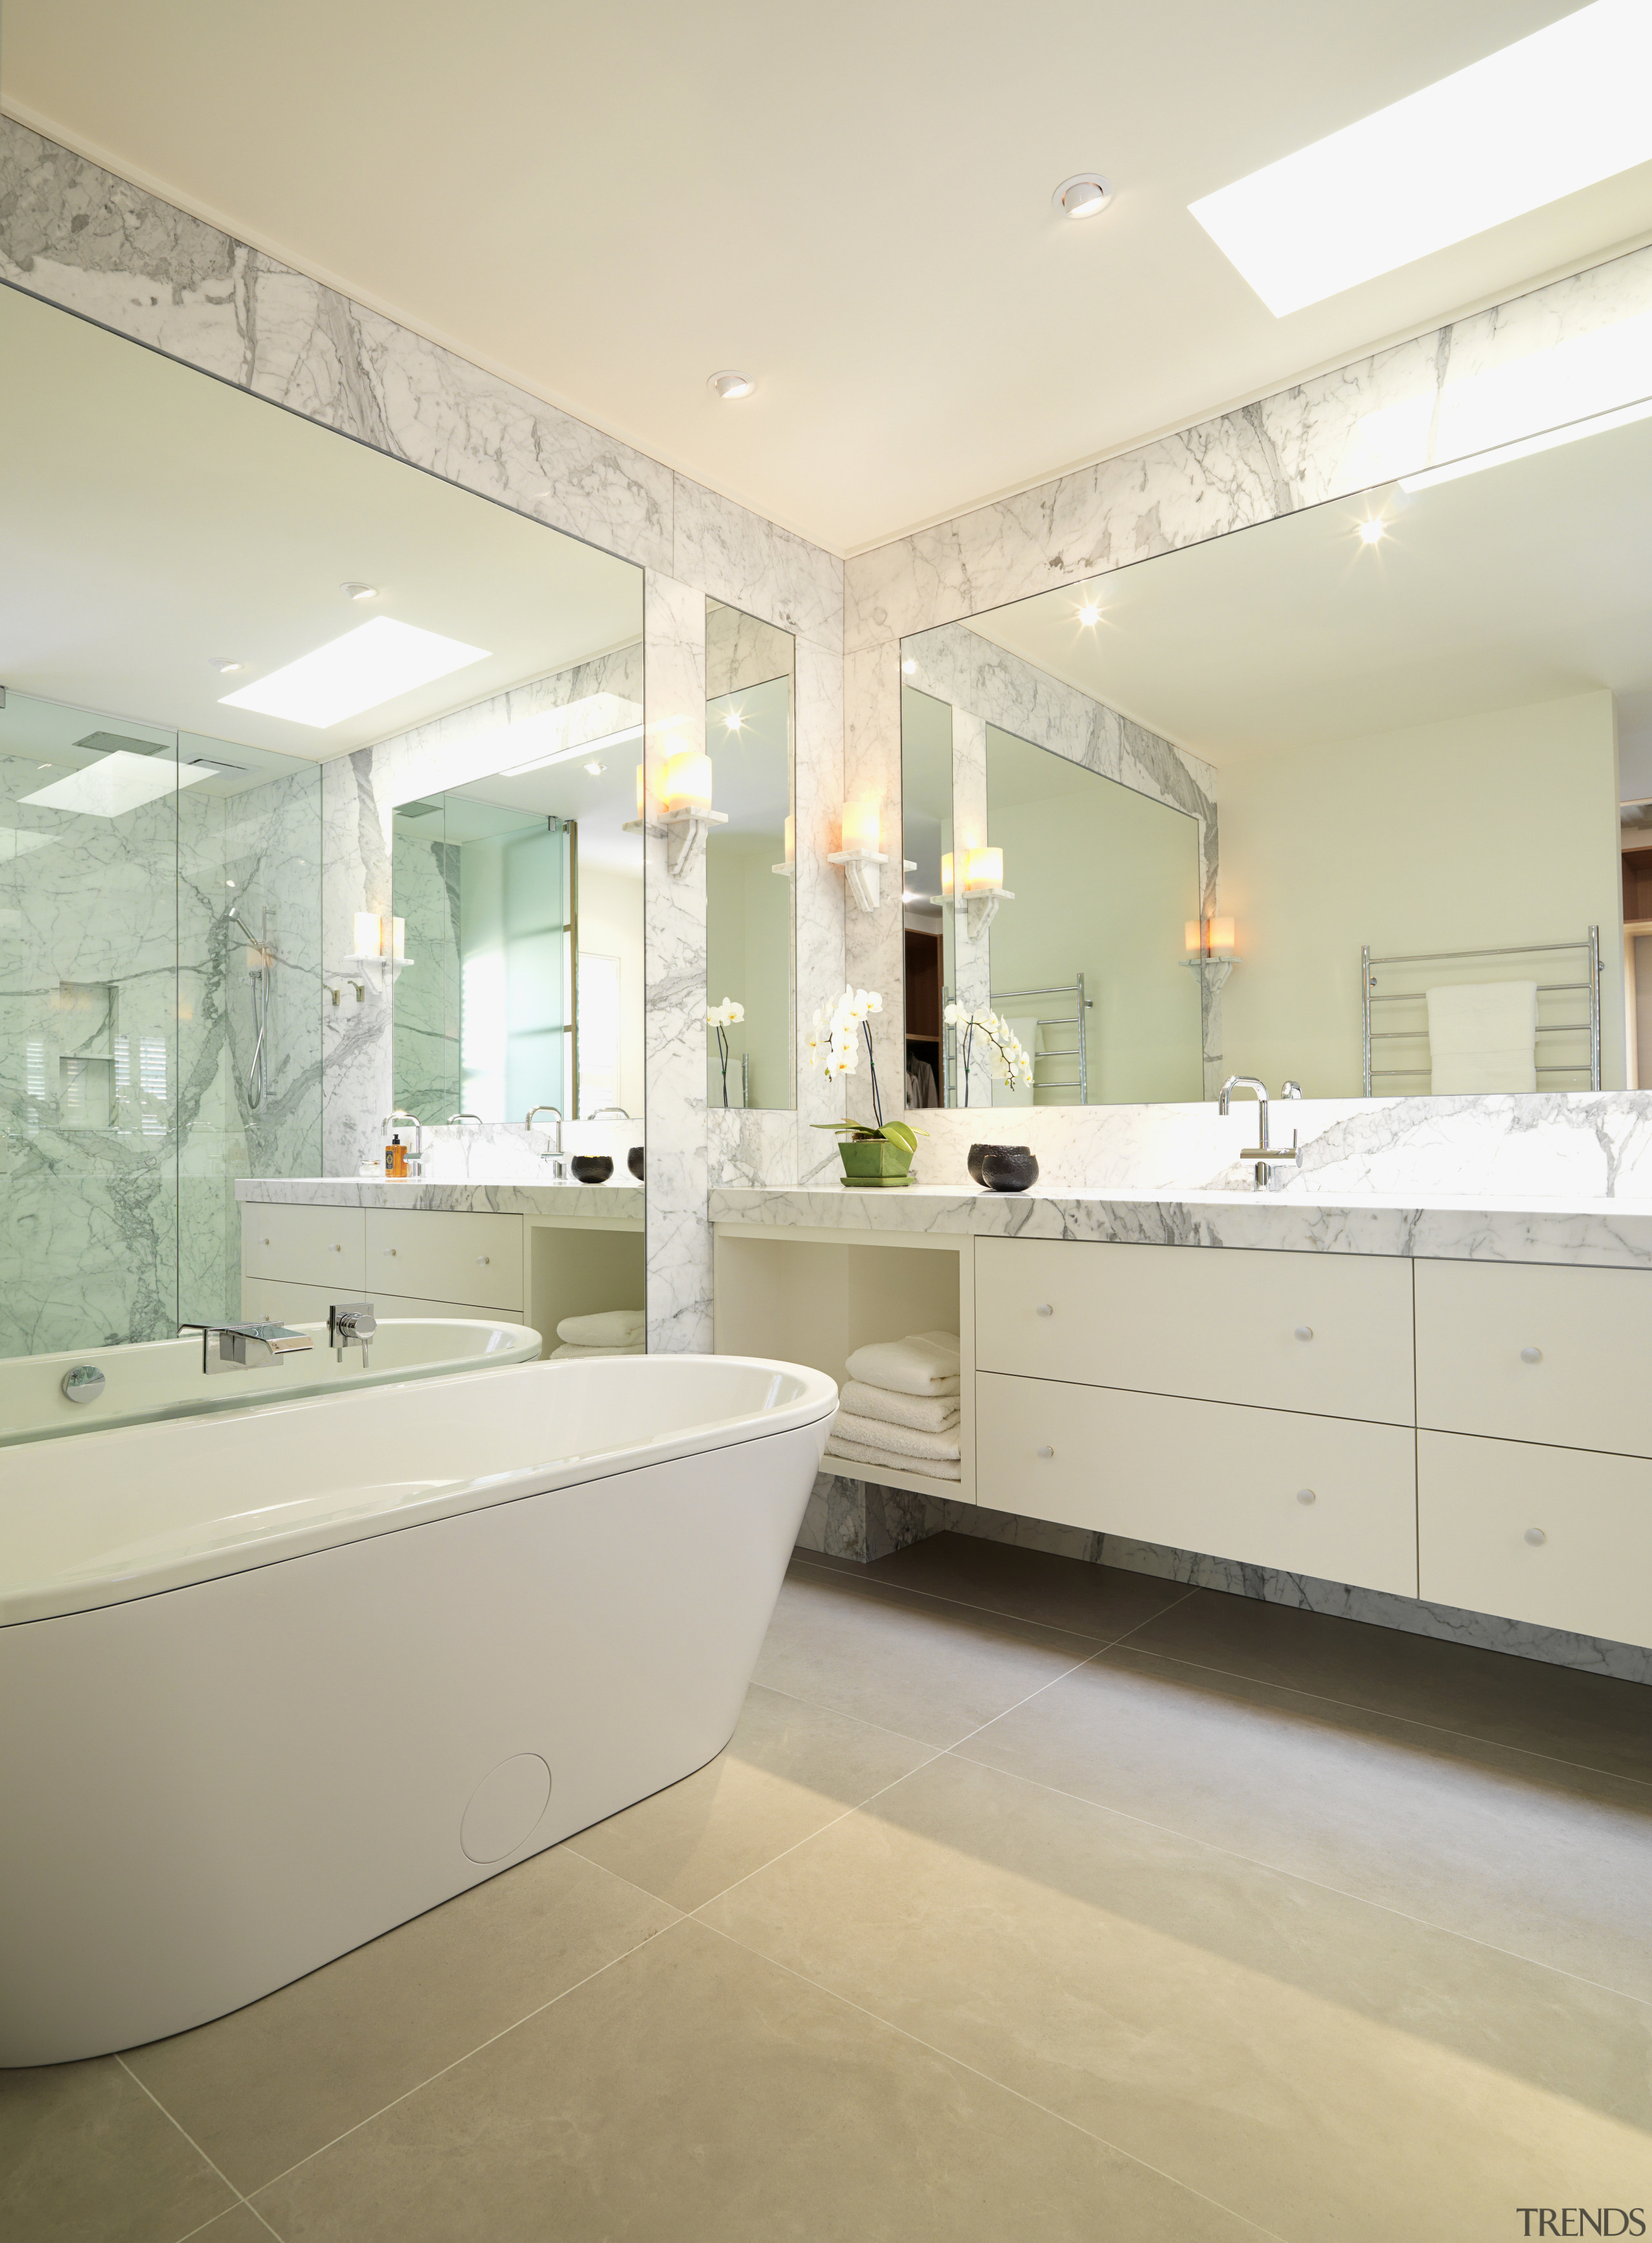 Interior view of bathroom featuring custom made vanity architecture, bathroom, ceiling, countertop, estate, floor, home, interior design, real estate, room, sink, tile, white